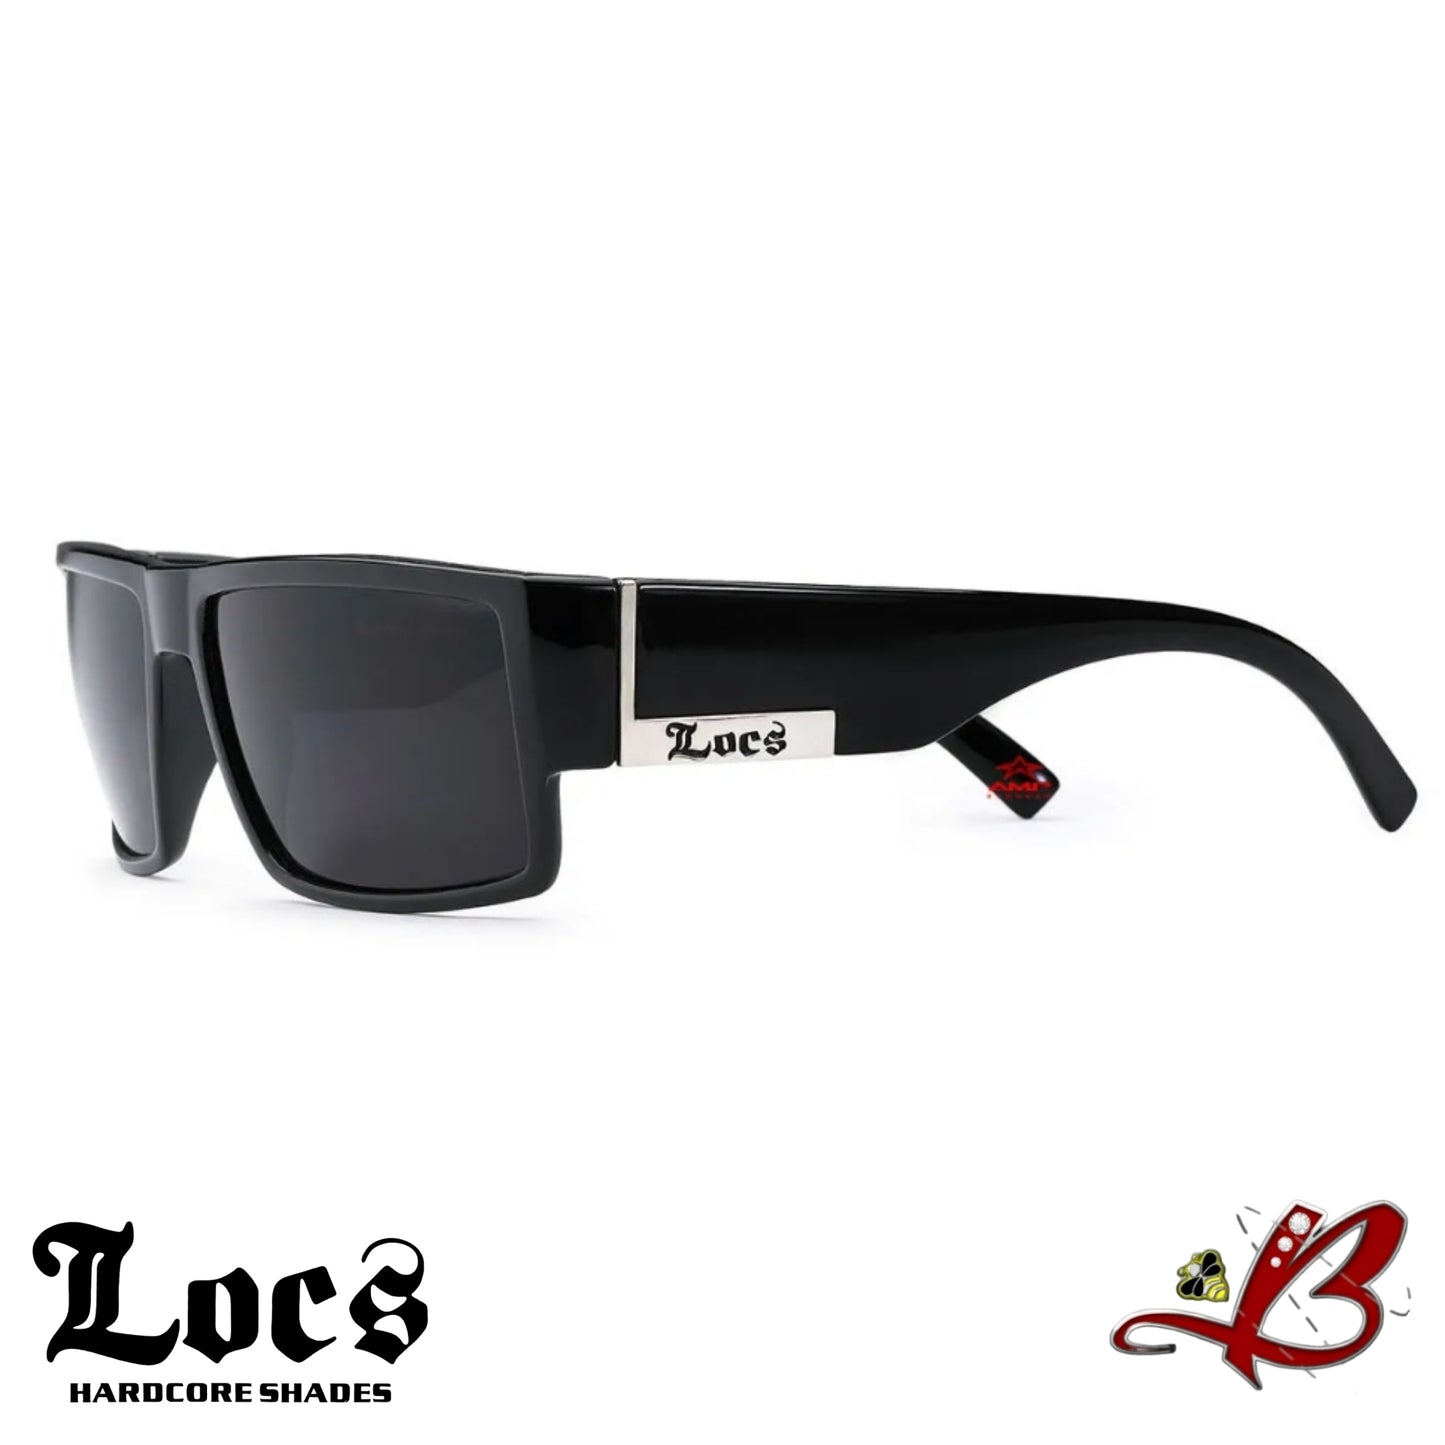 Locs OG Square Gangster Lowrider Sunglasses Street Smoke Black Frame Dark Lens Silver Accent Shades